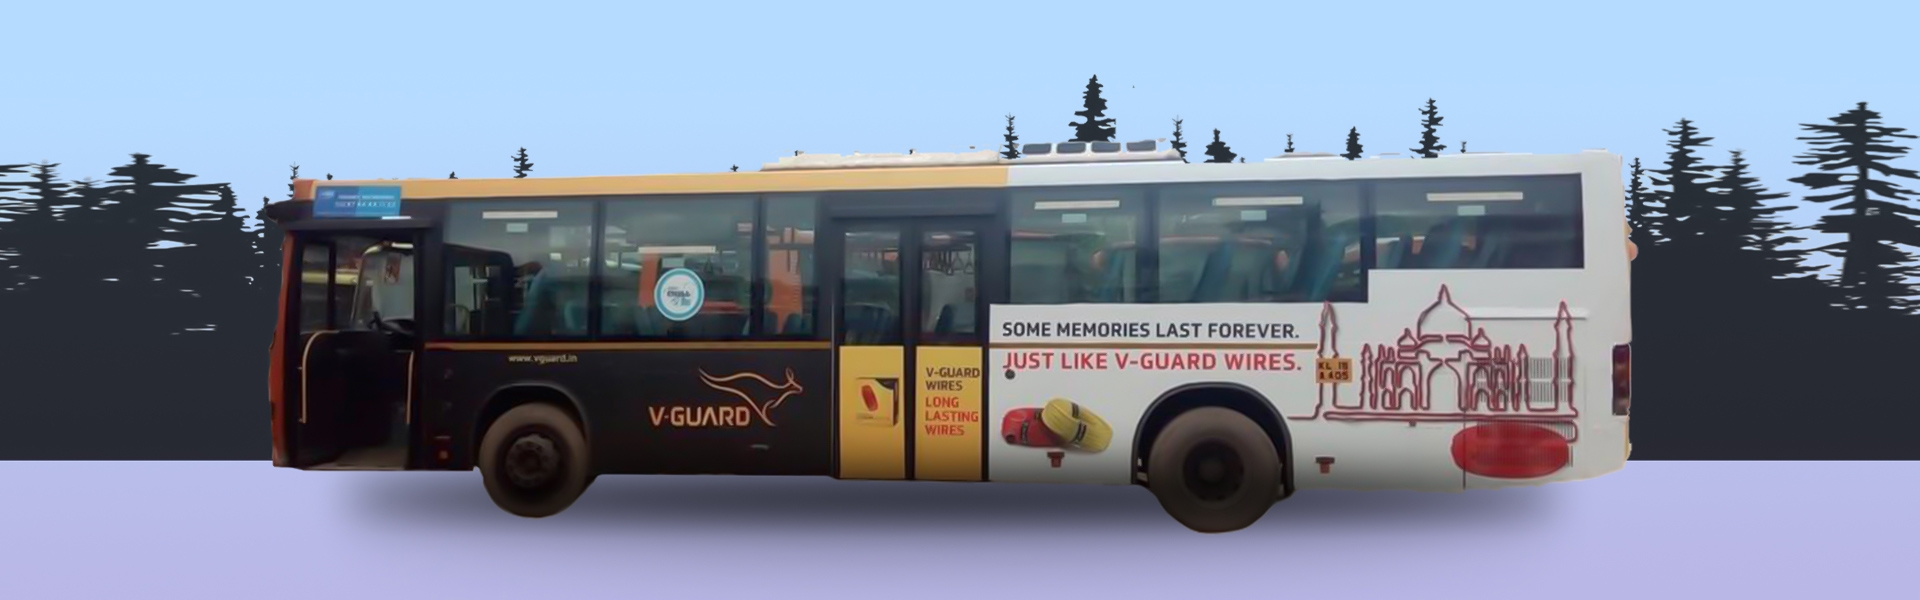 bus back panel advertisement in kerala